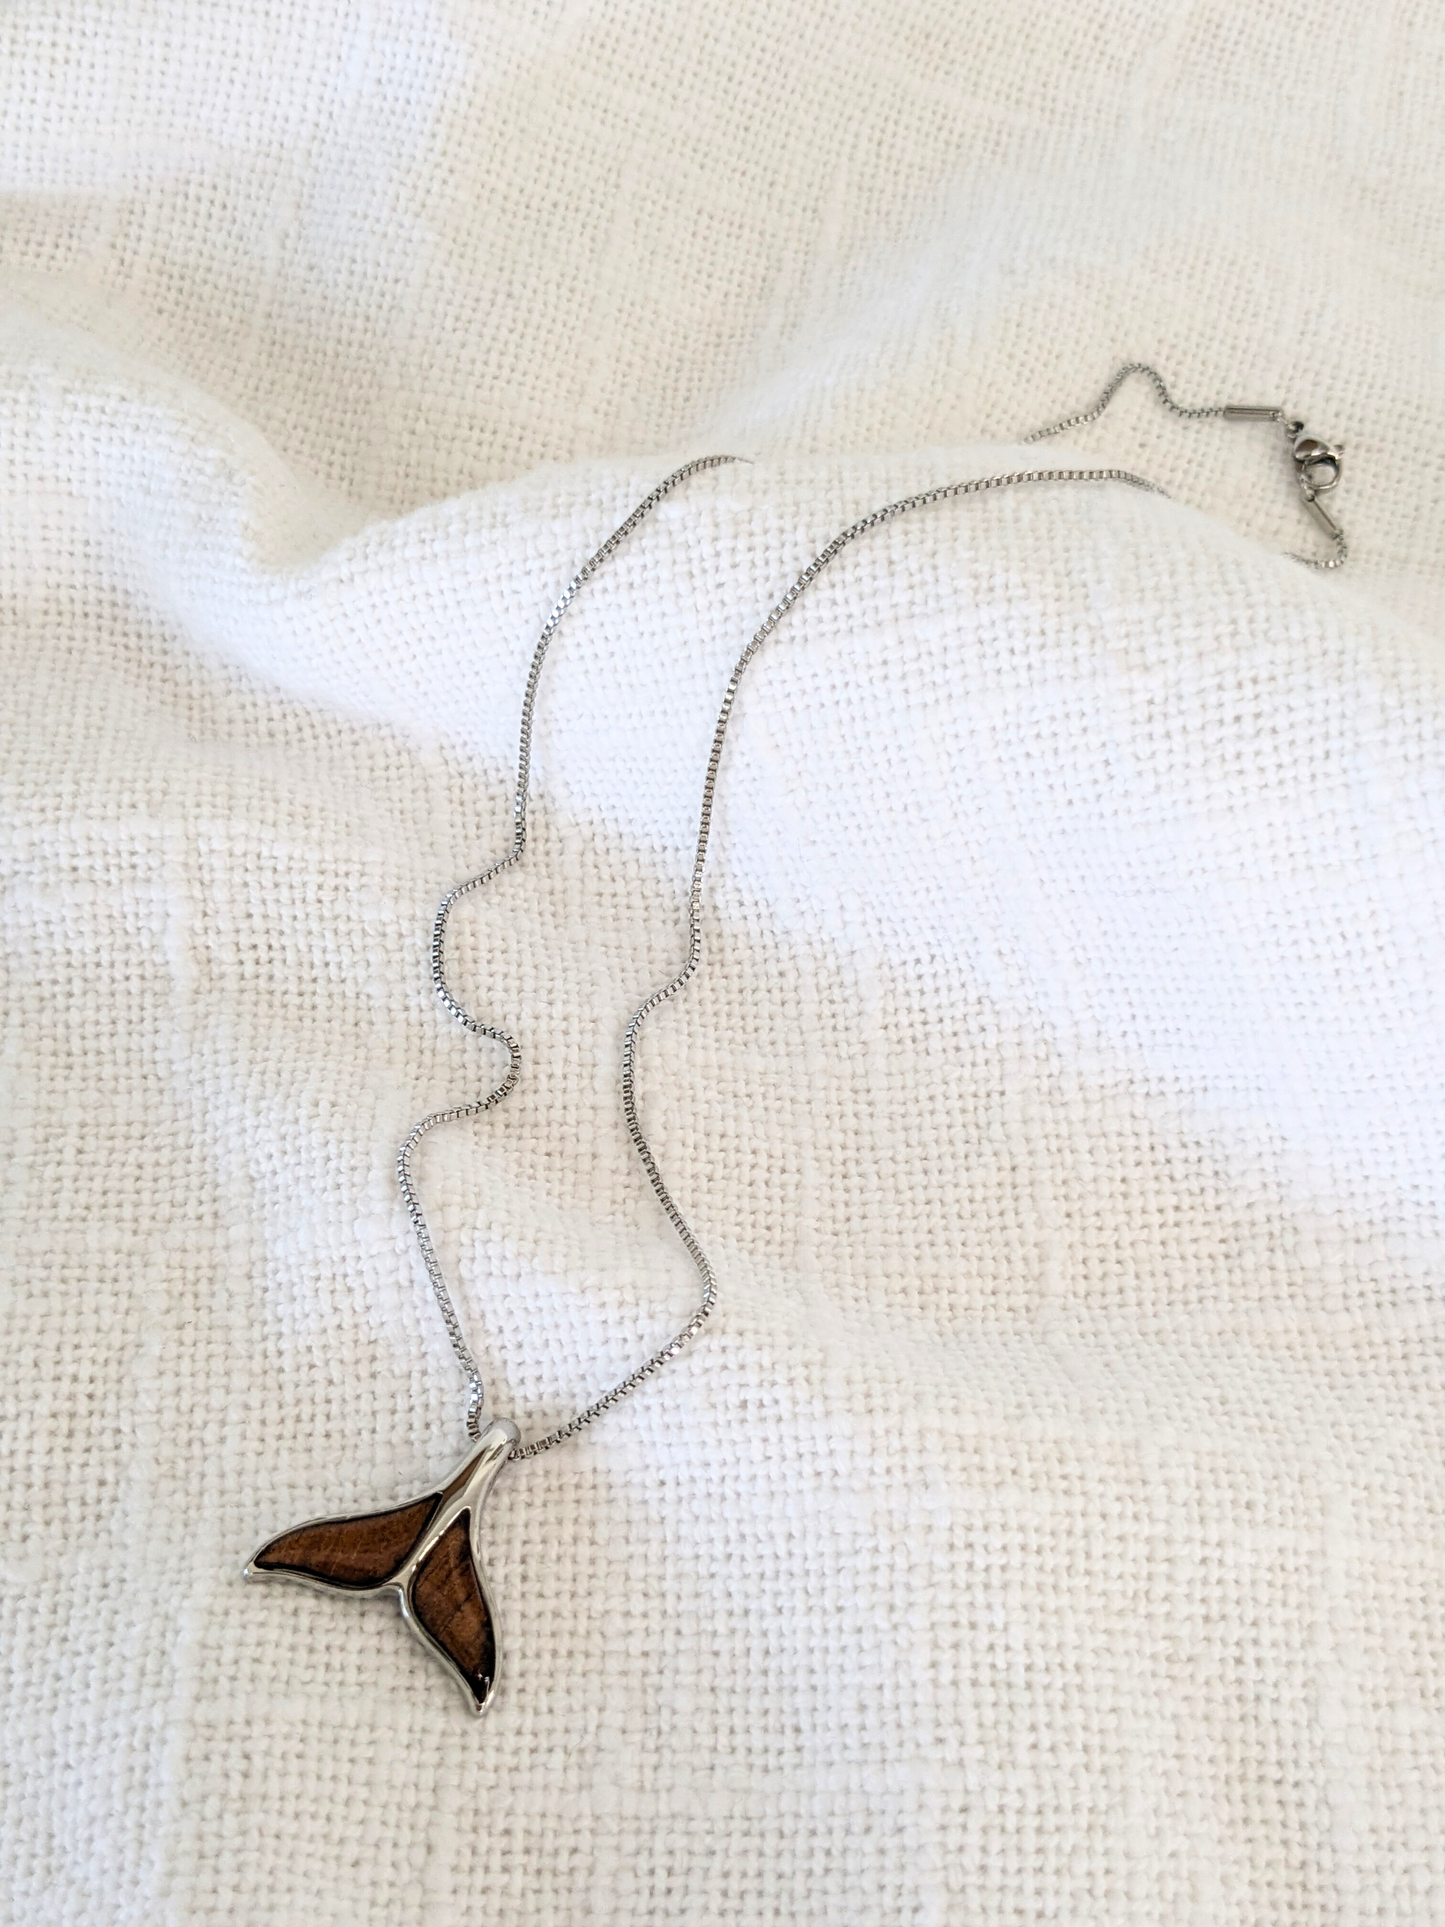 Hawaiian Koa Whale Tail Necklace